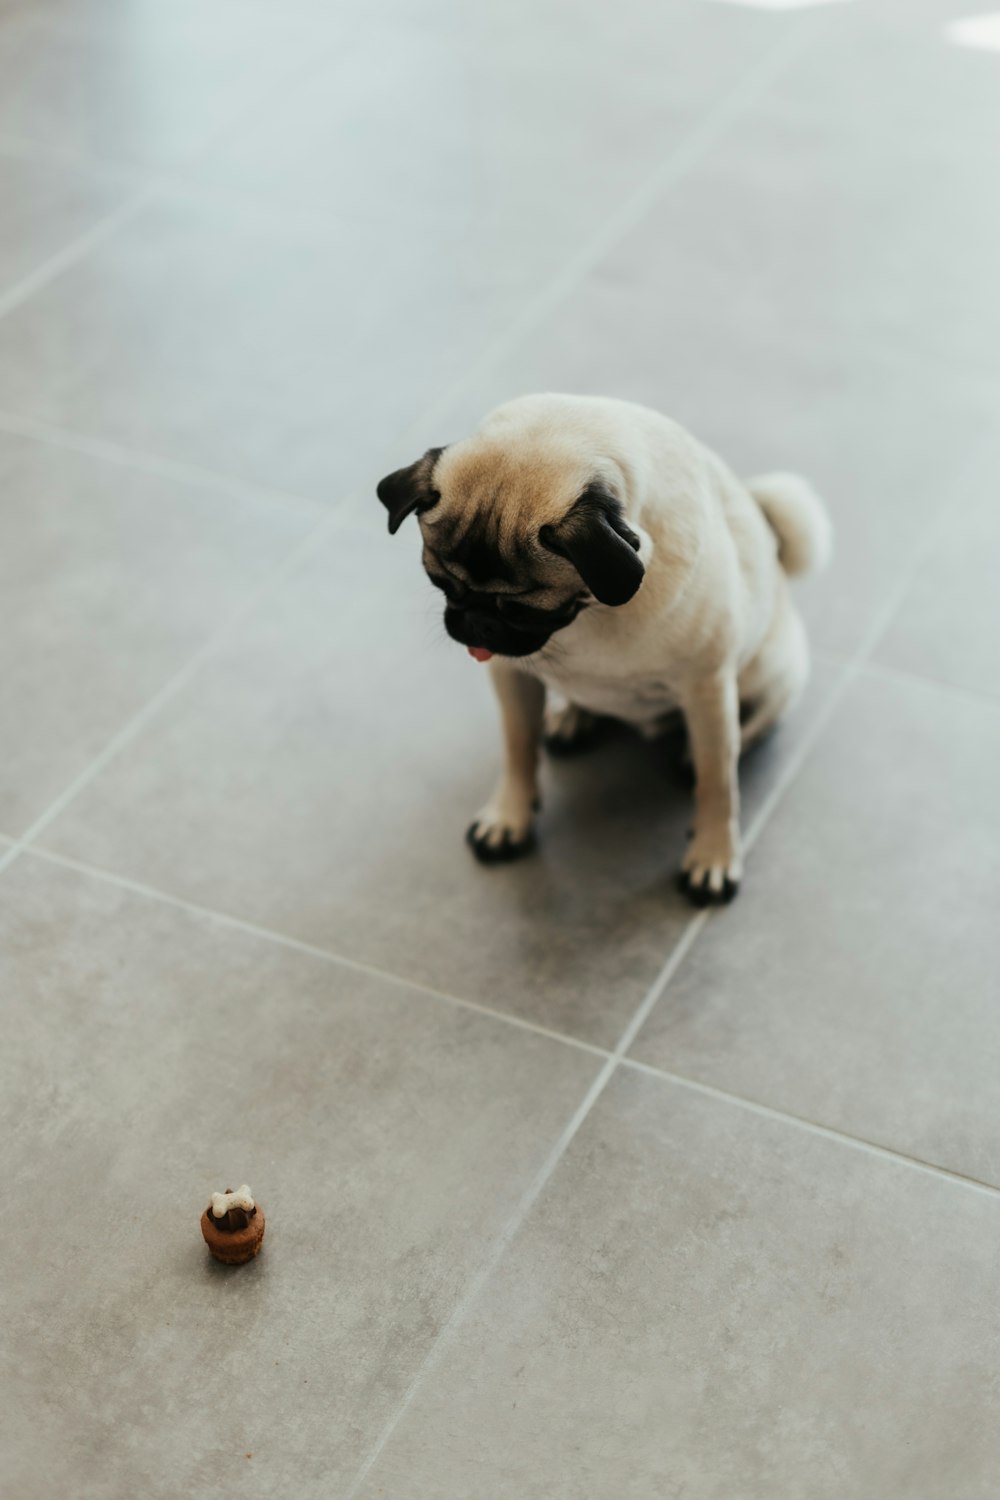 a small pug dog standing on a tile floor